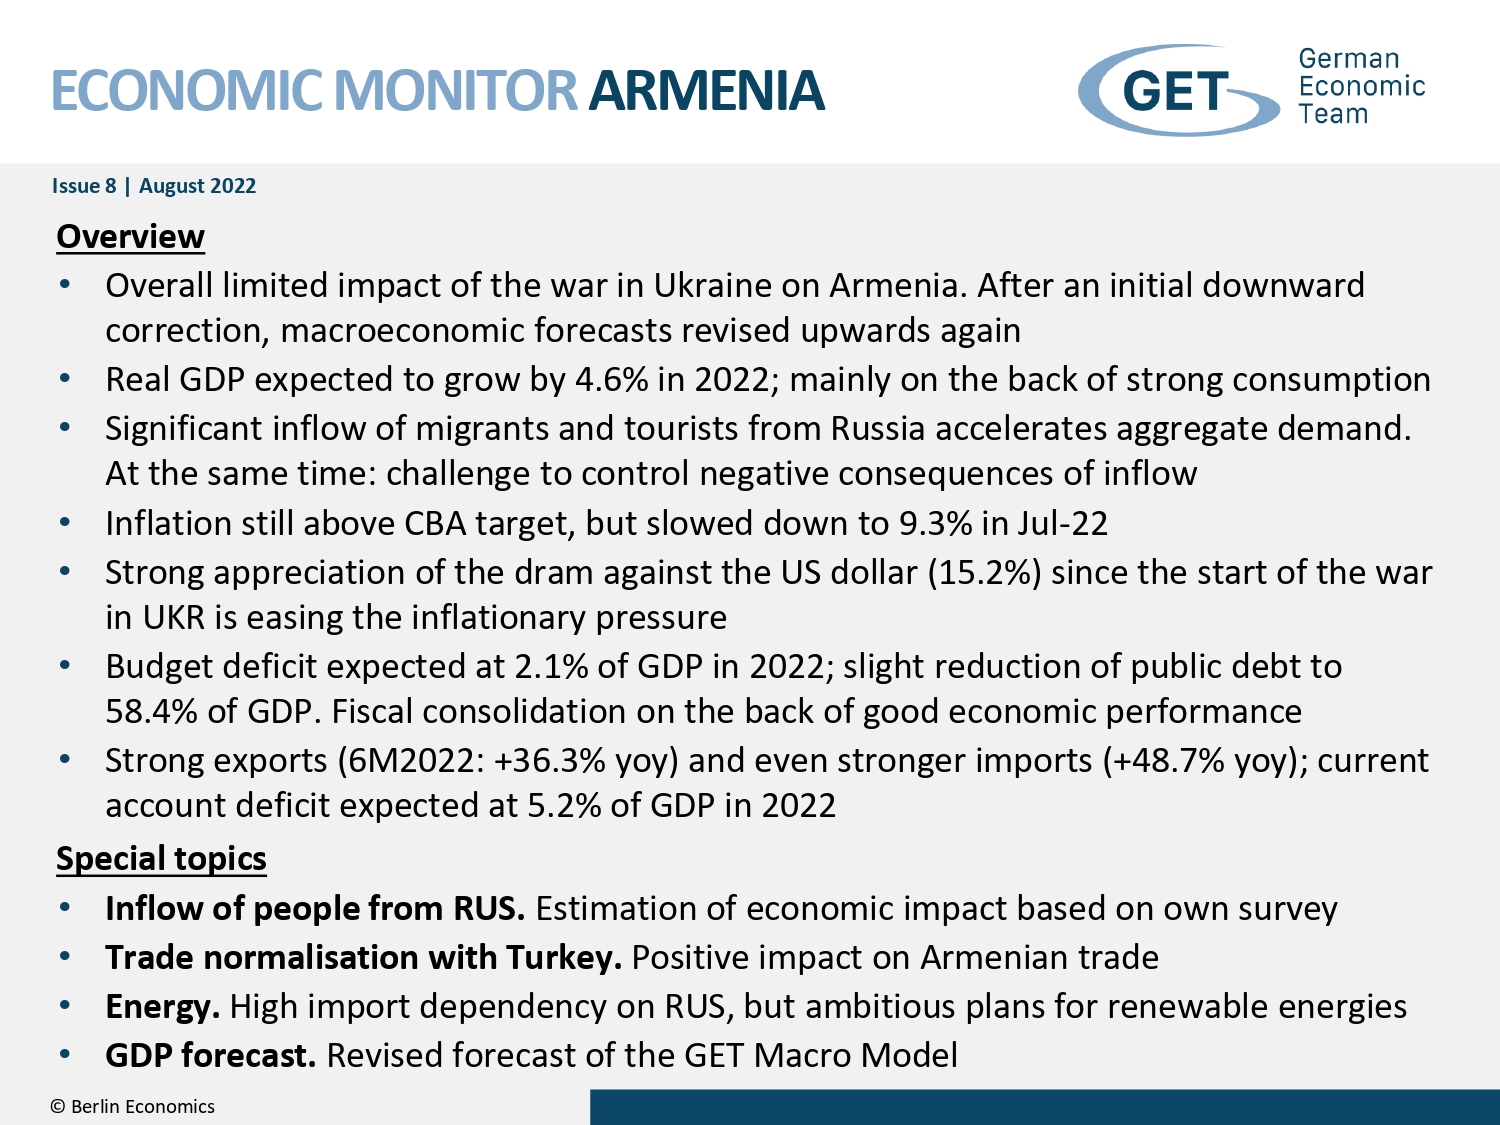 Economic Monitor Armenia (German Economic Team)